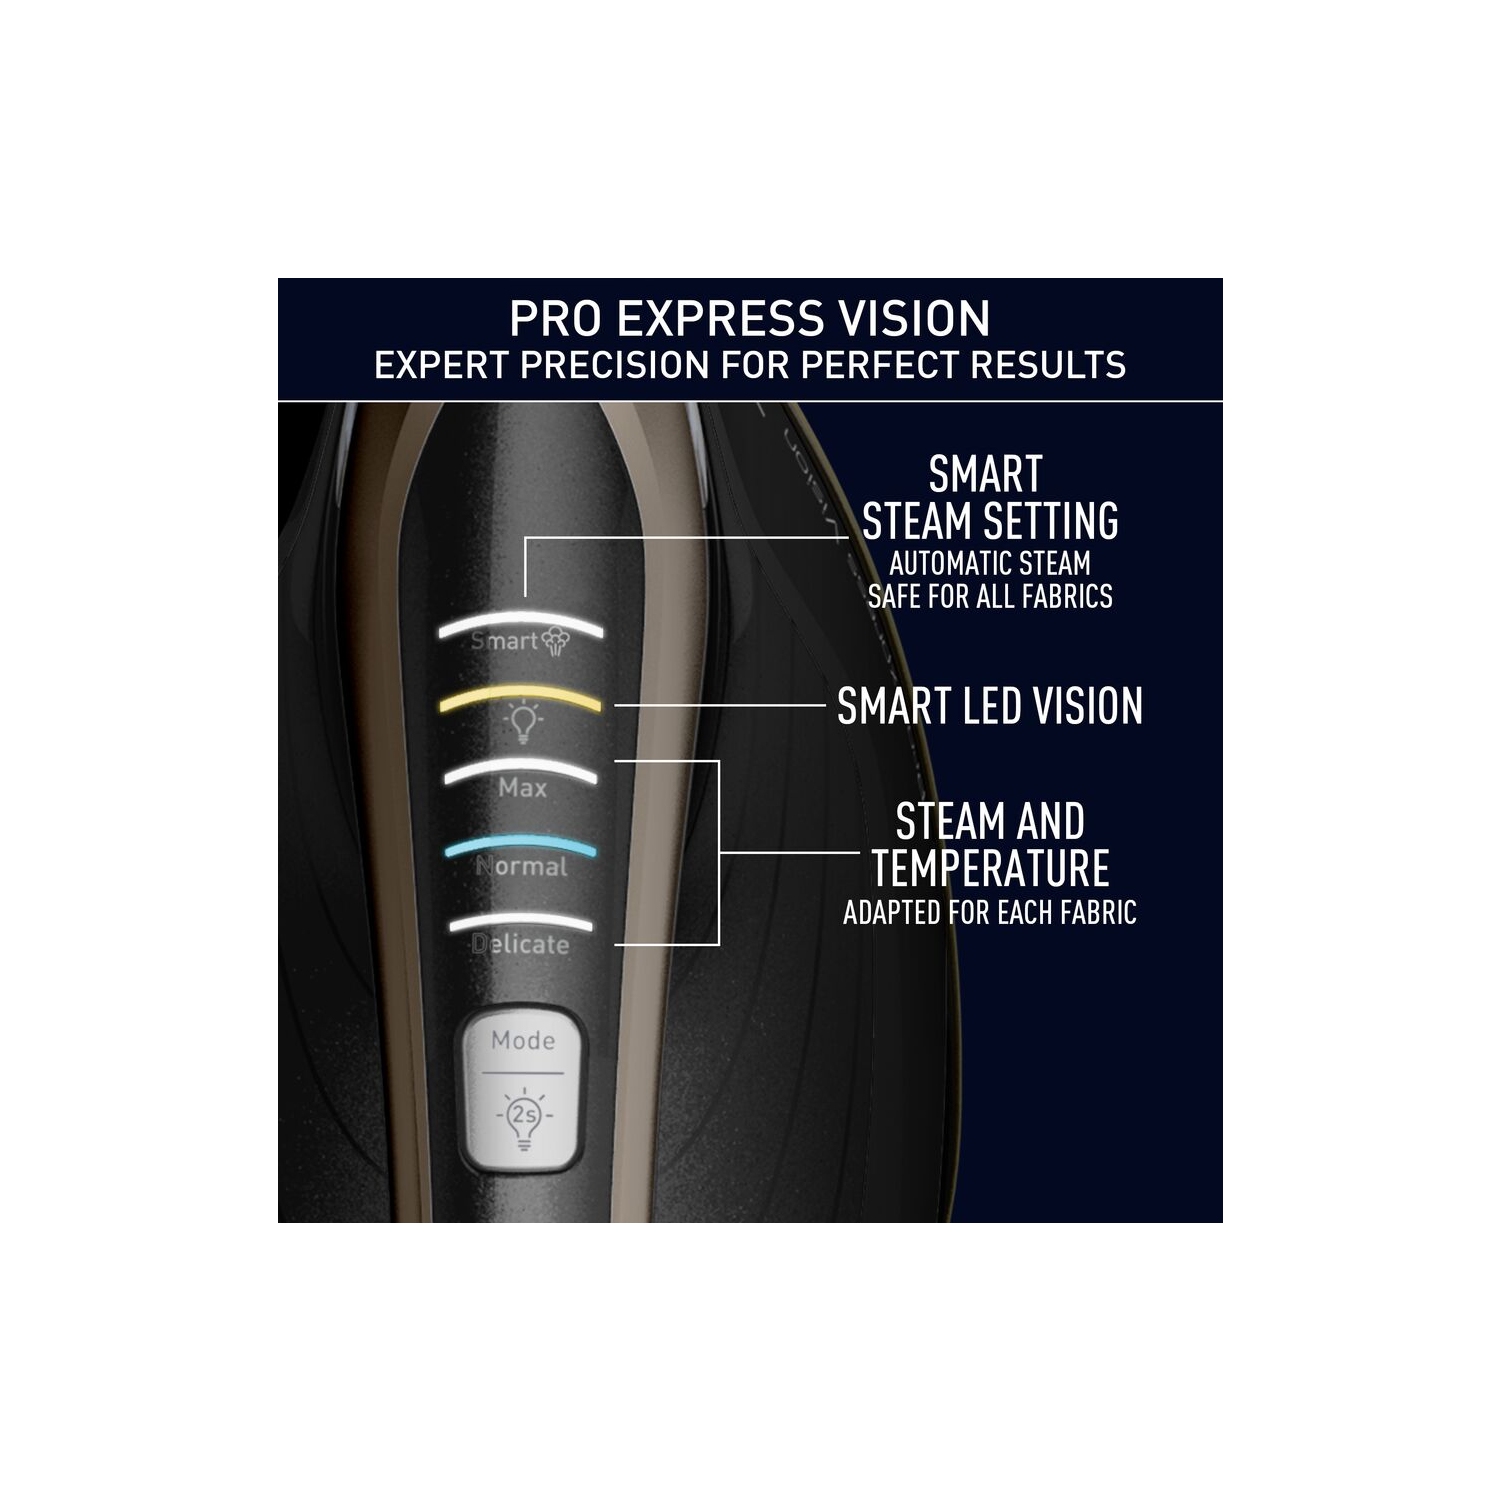 Tefal GV9820G0 Tefal Pro Express Vision Iron - Black & Gold - 5